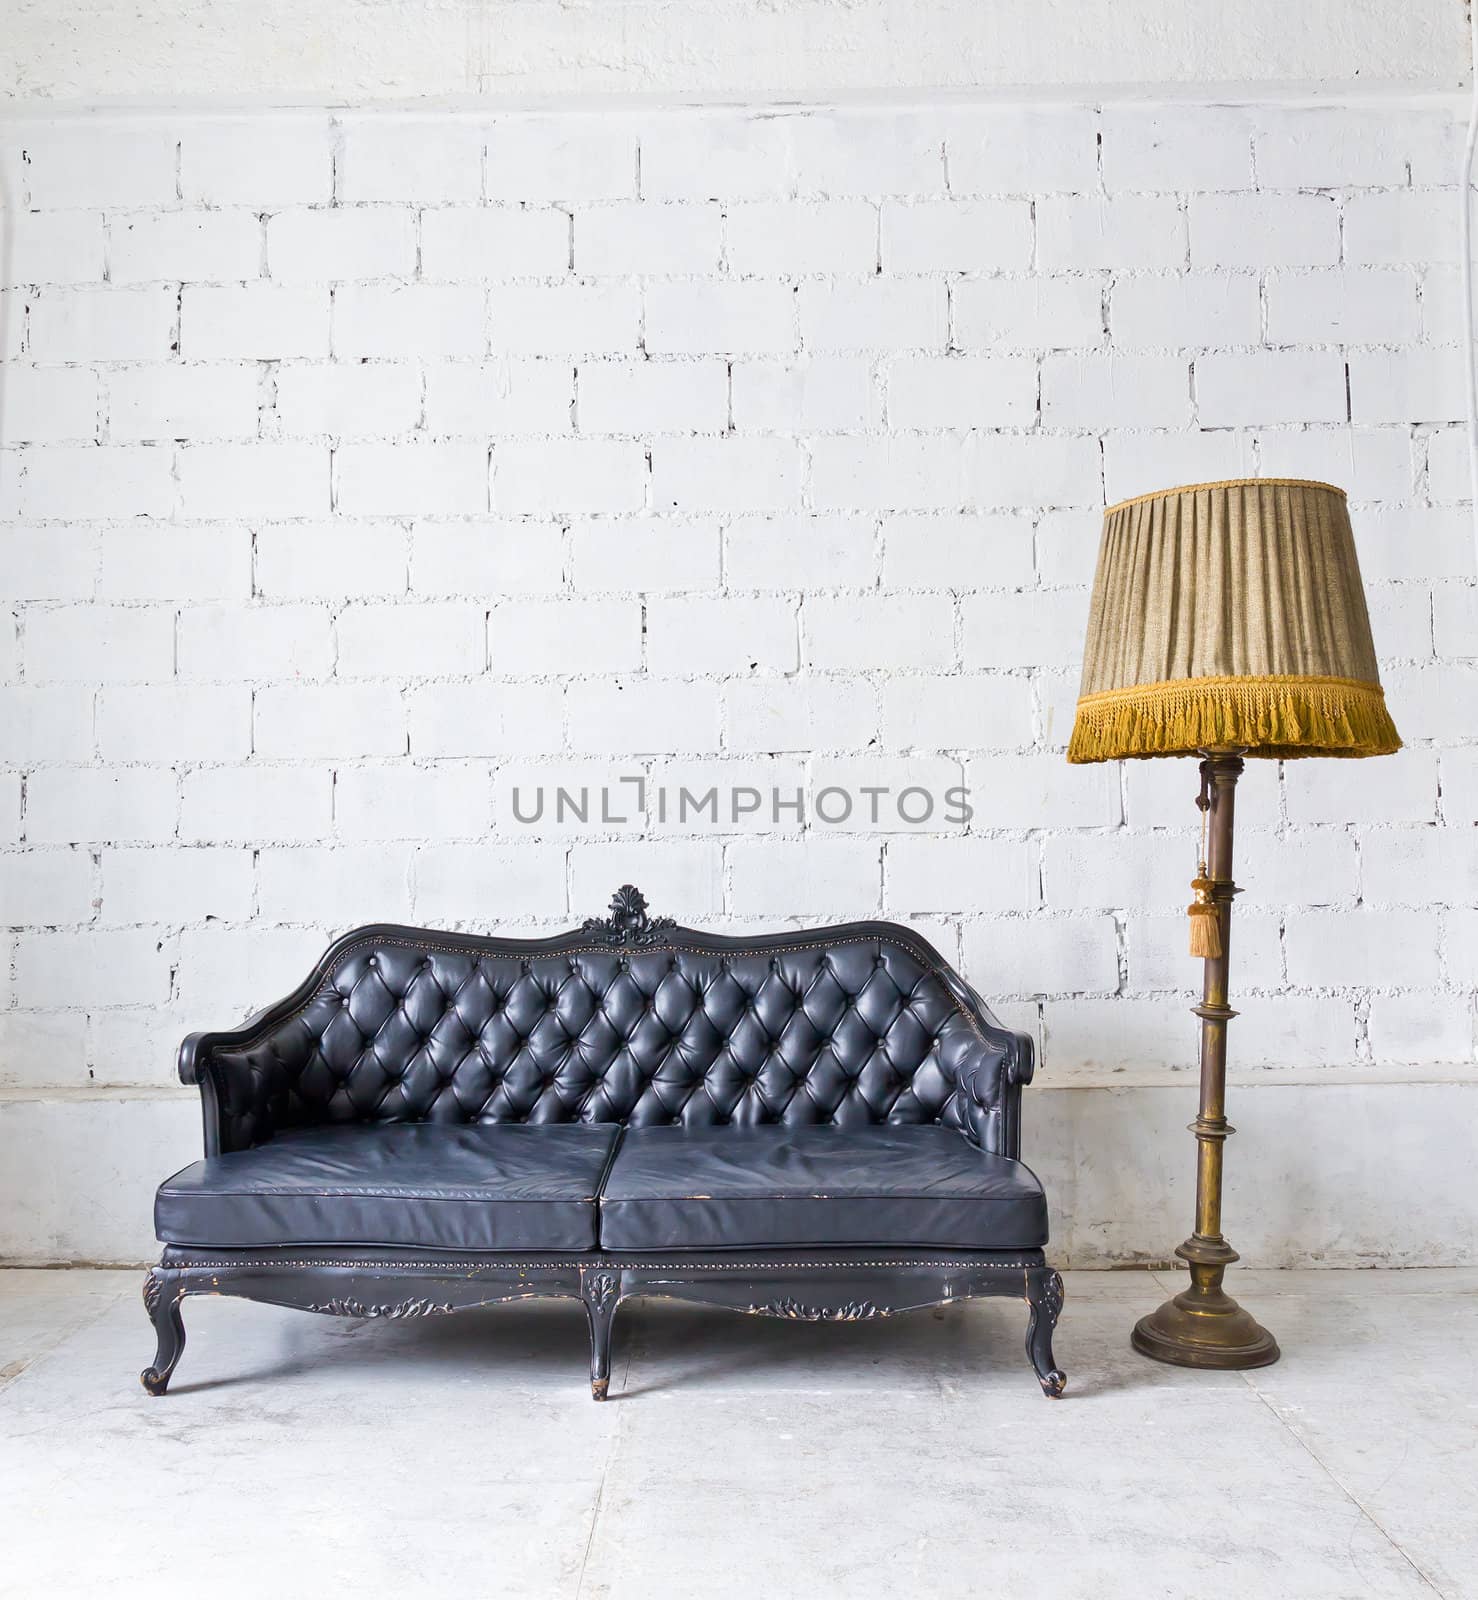 vintage luxury armchair in white room